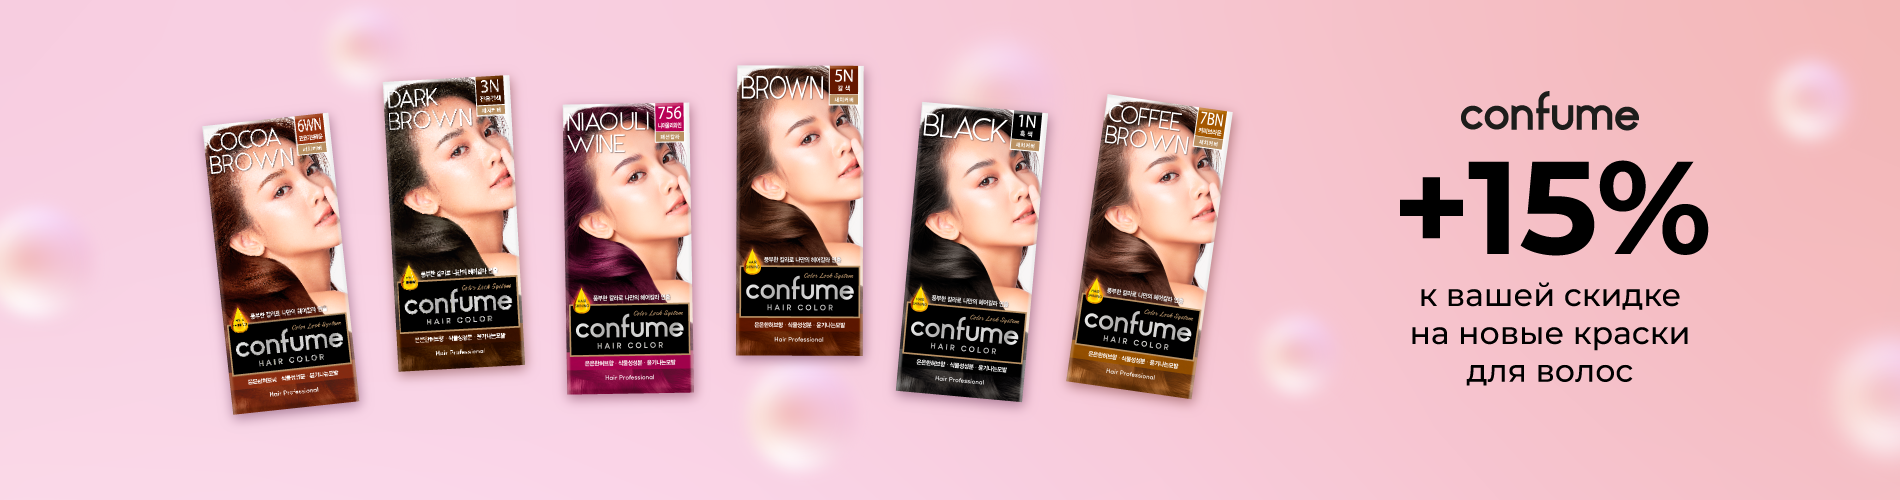 Скидка 15% на новые краски для волос от Confume.